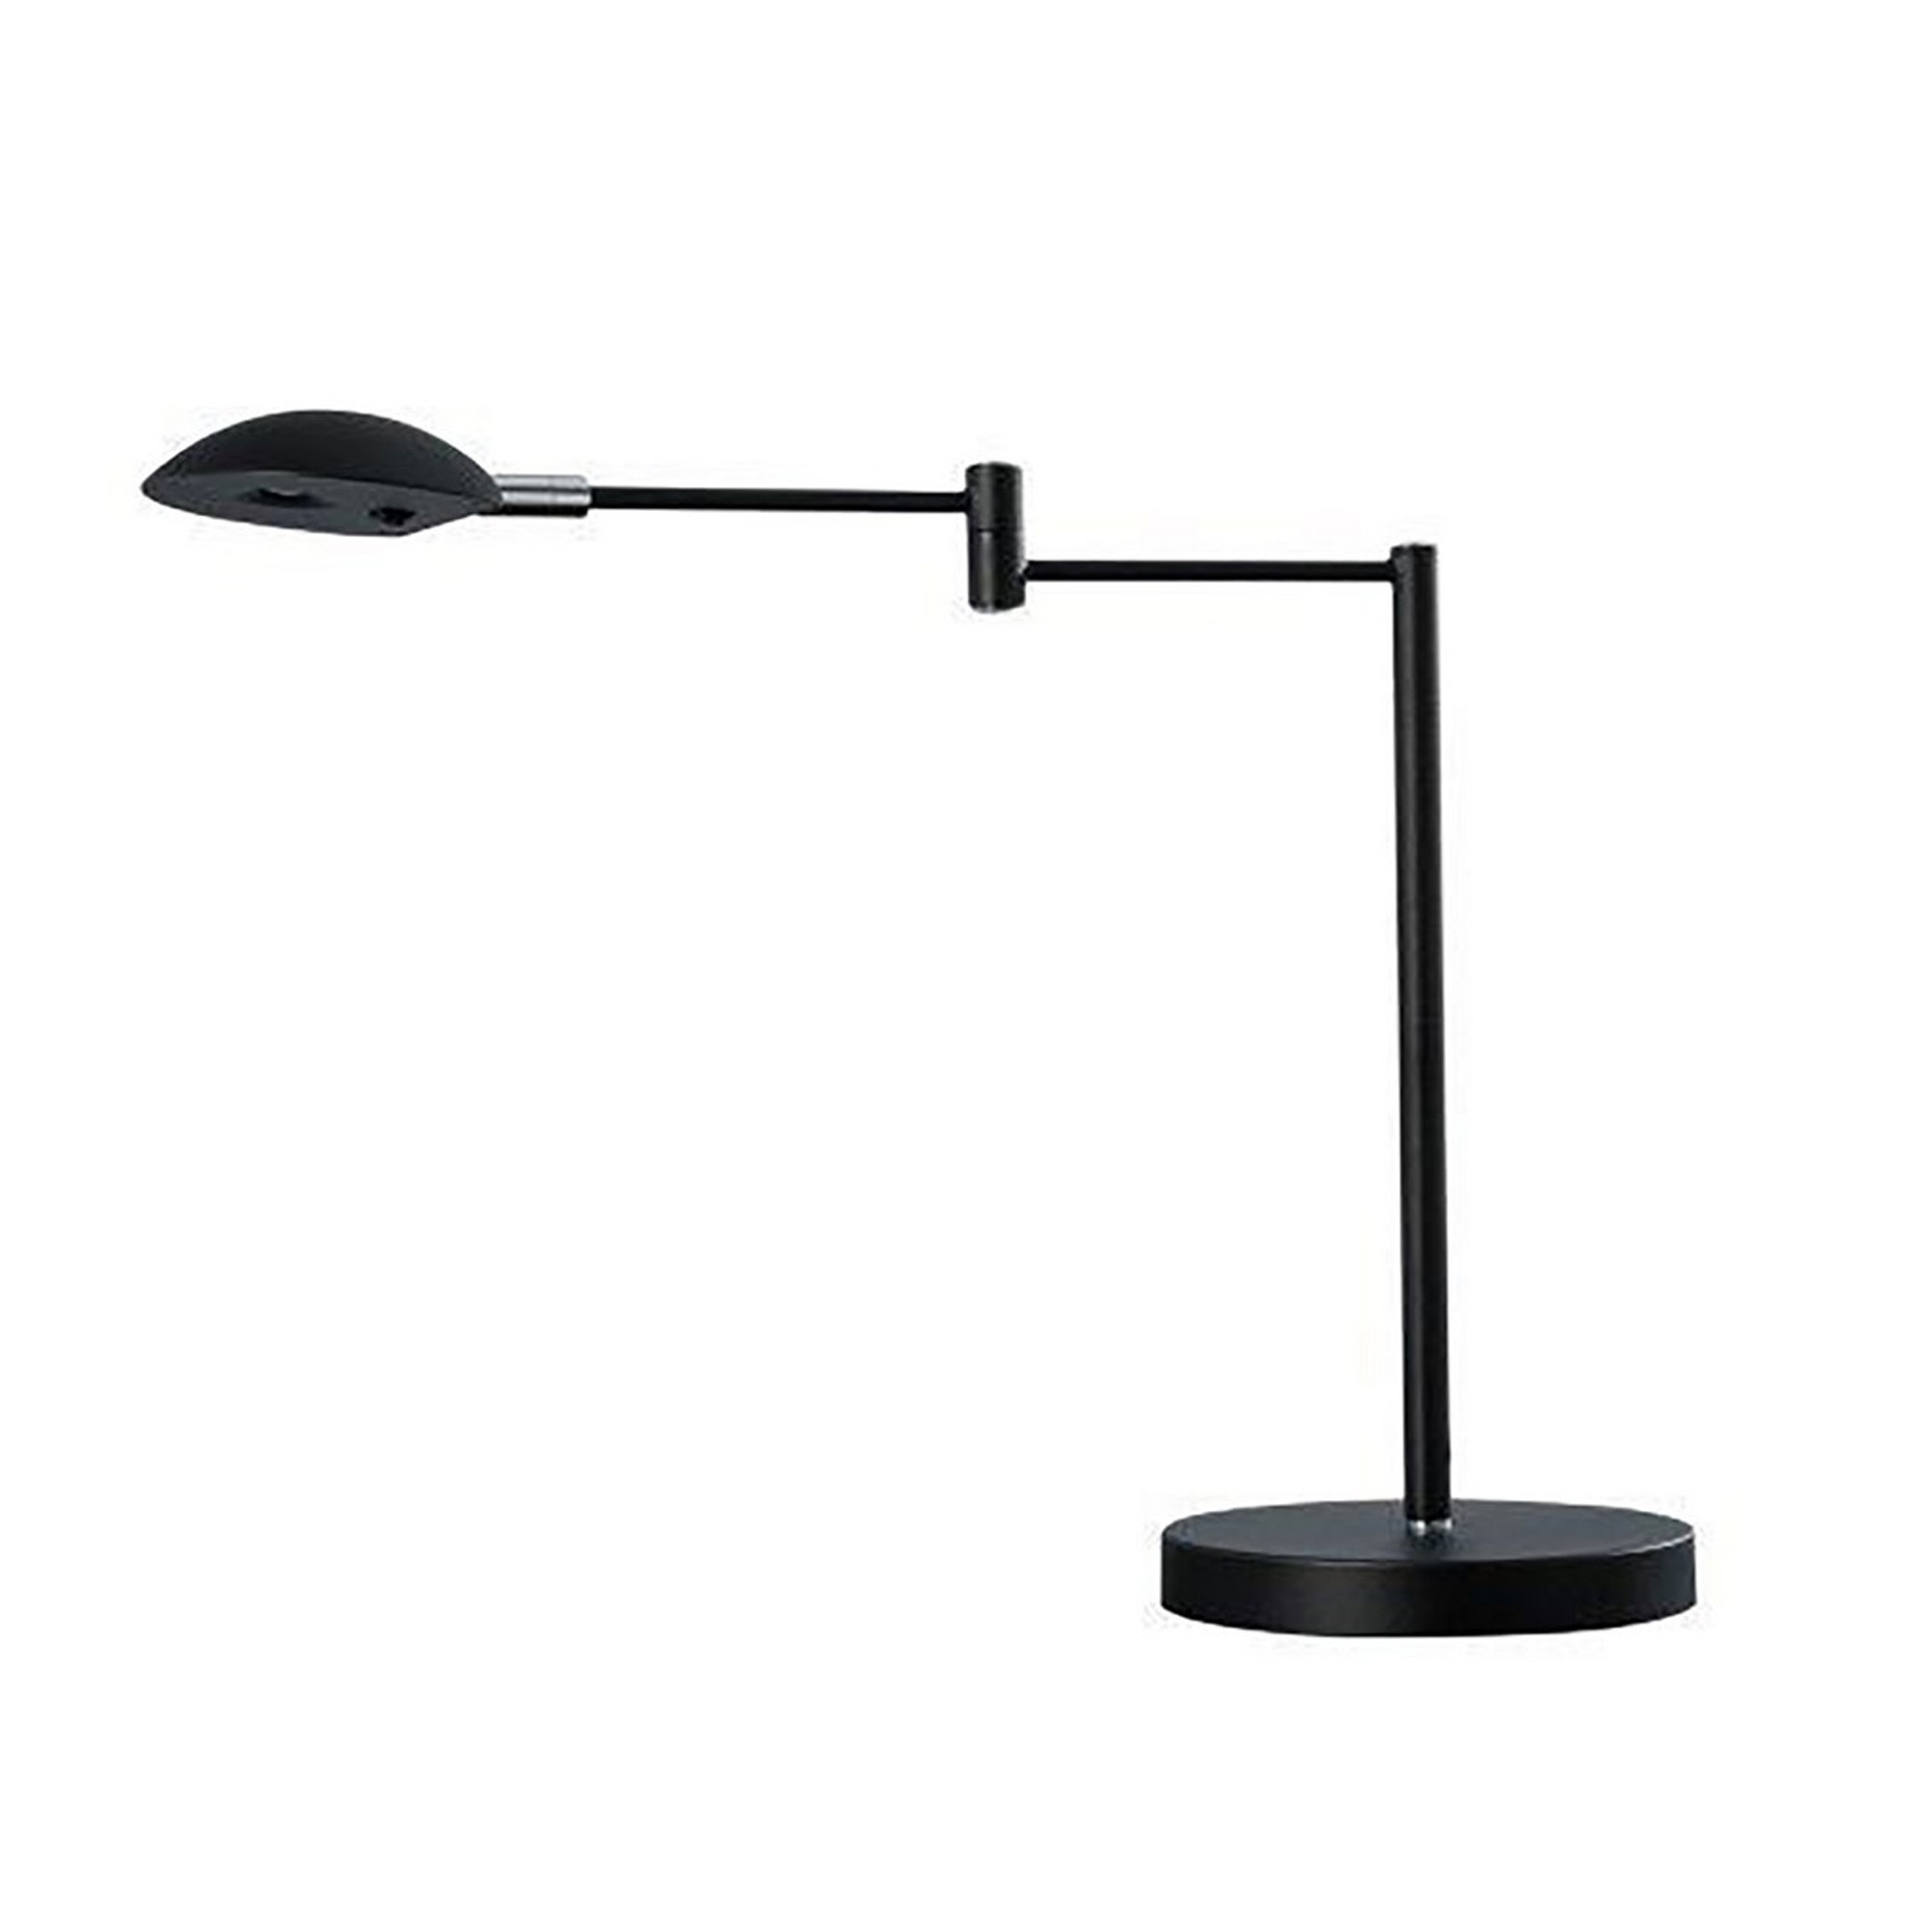 Benjara Benzara BM240389 Desk Lamp with Adjustable Swing Metal Arm, Black